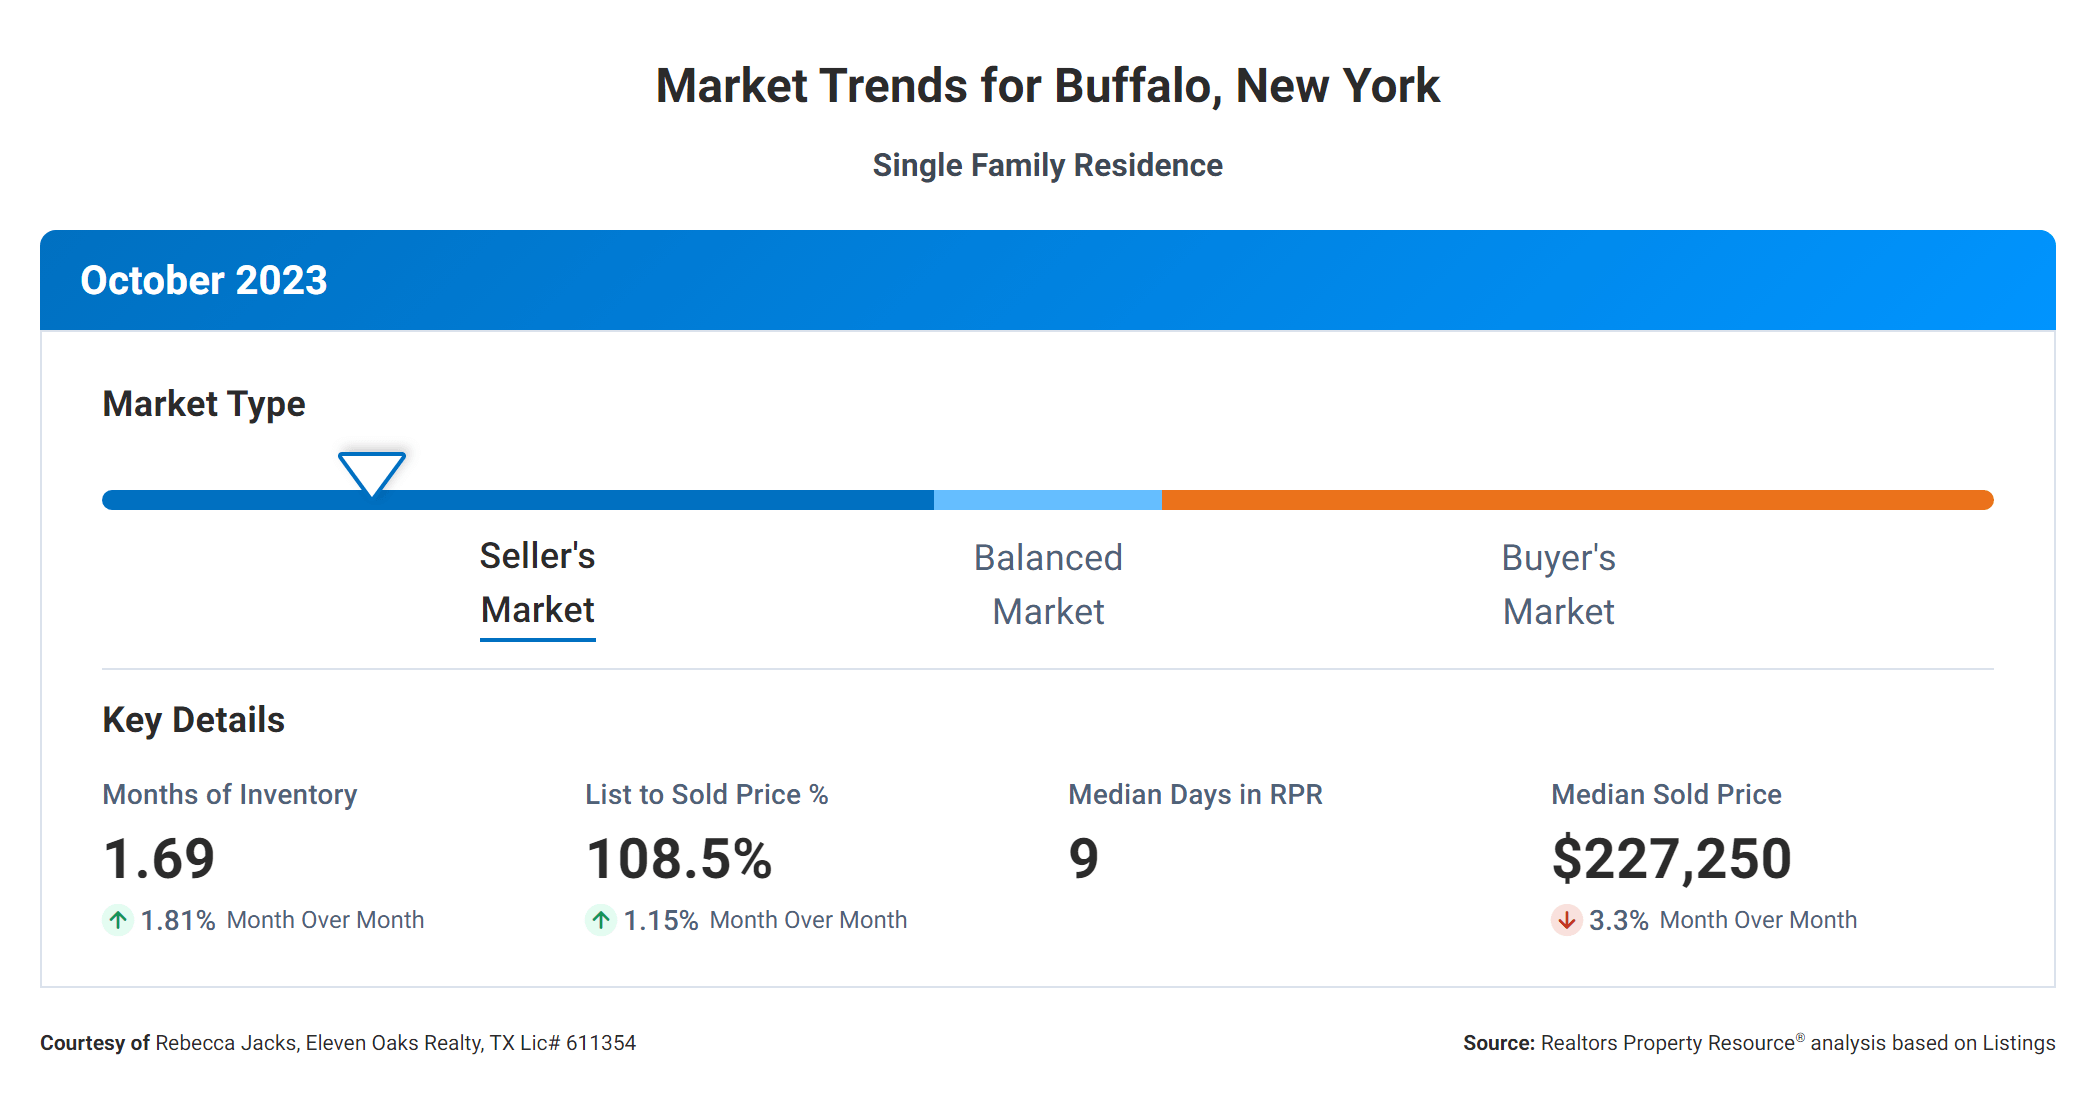 October 2023 market trends for Buffalo New York